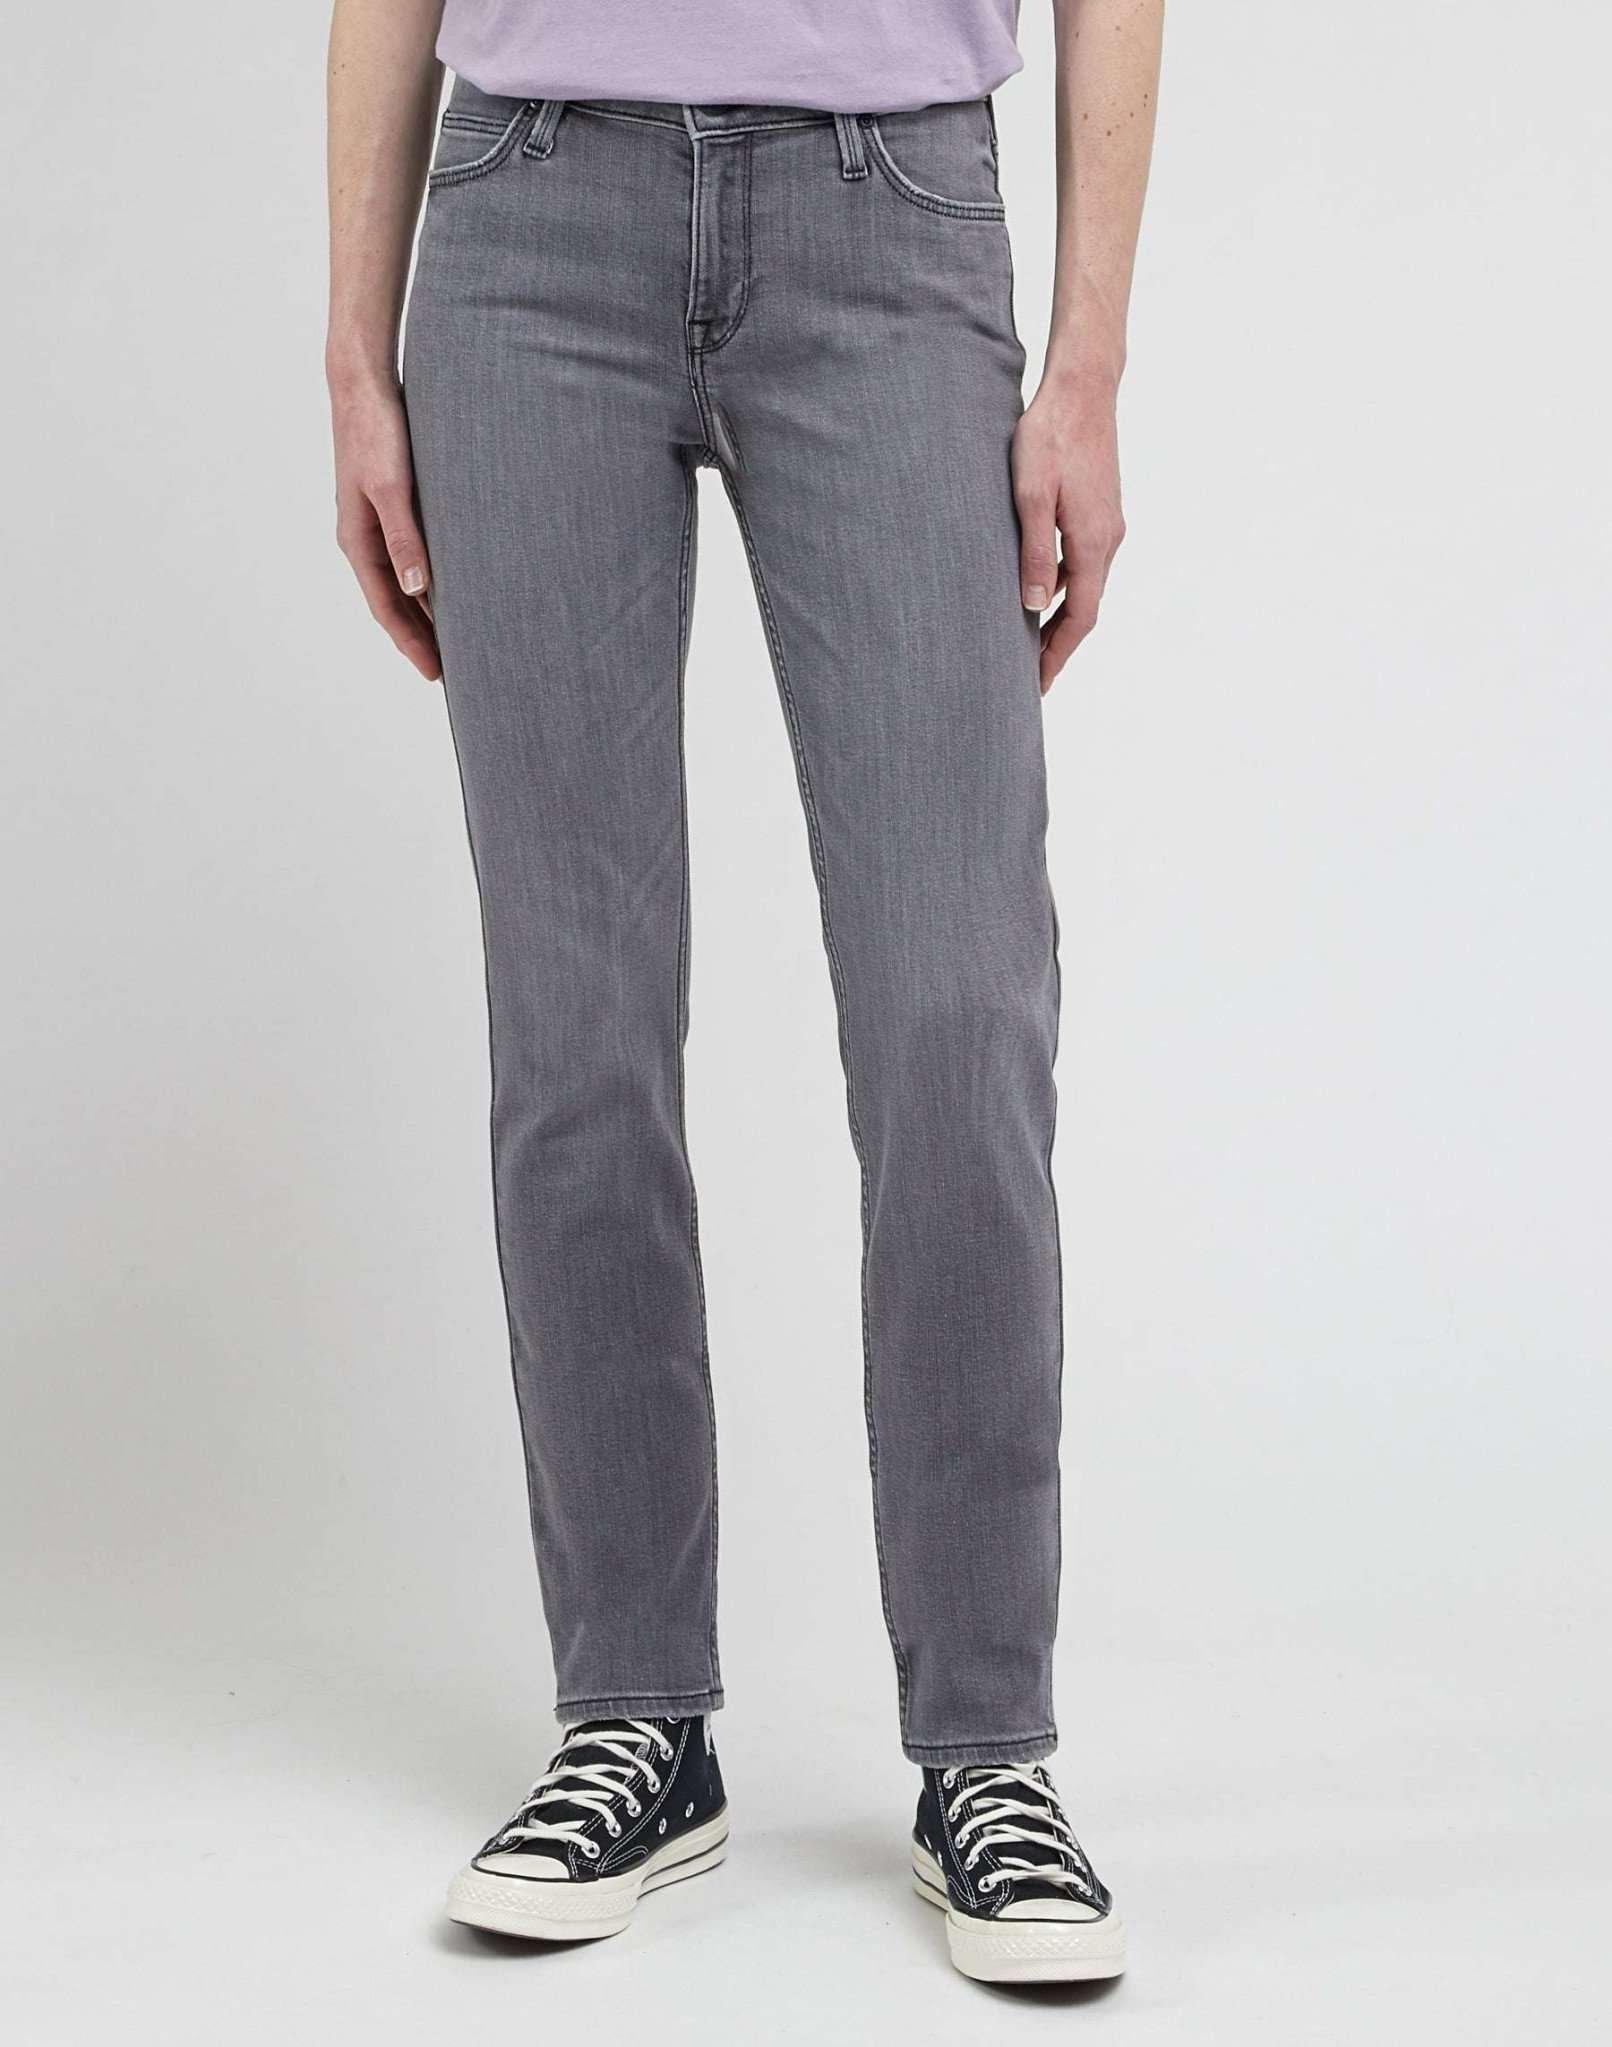 Jeans Slim Fit Elly Damen Taubengrau L33/W31 von Lee